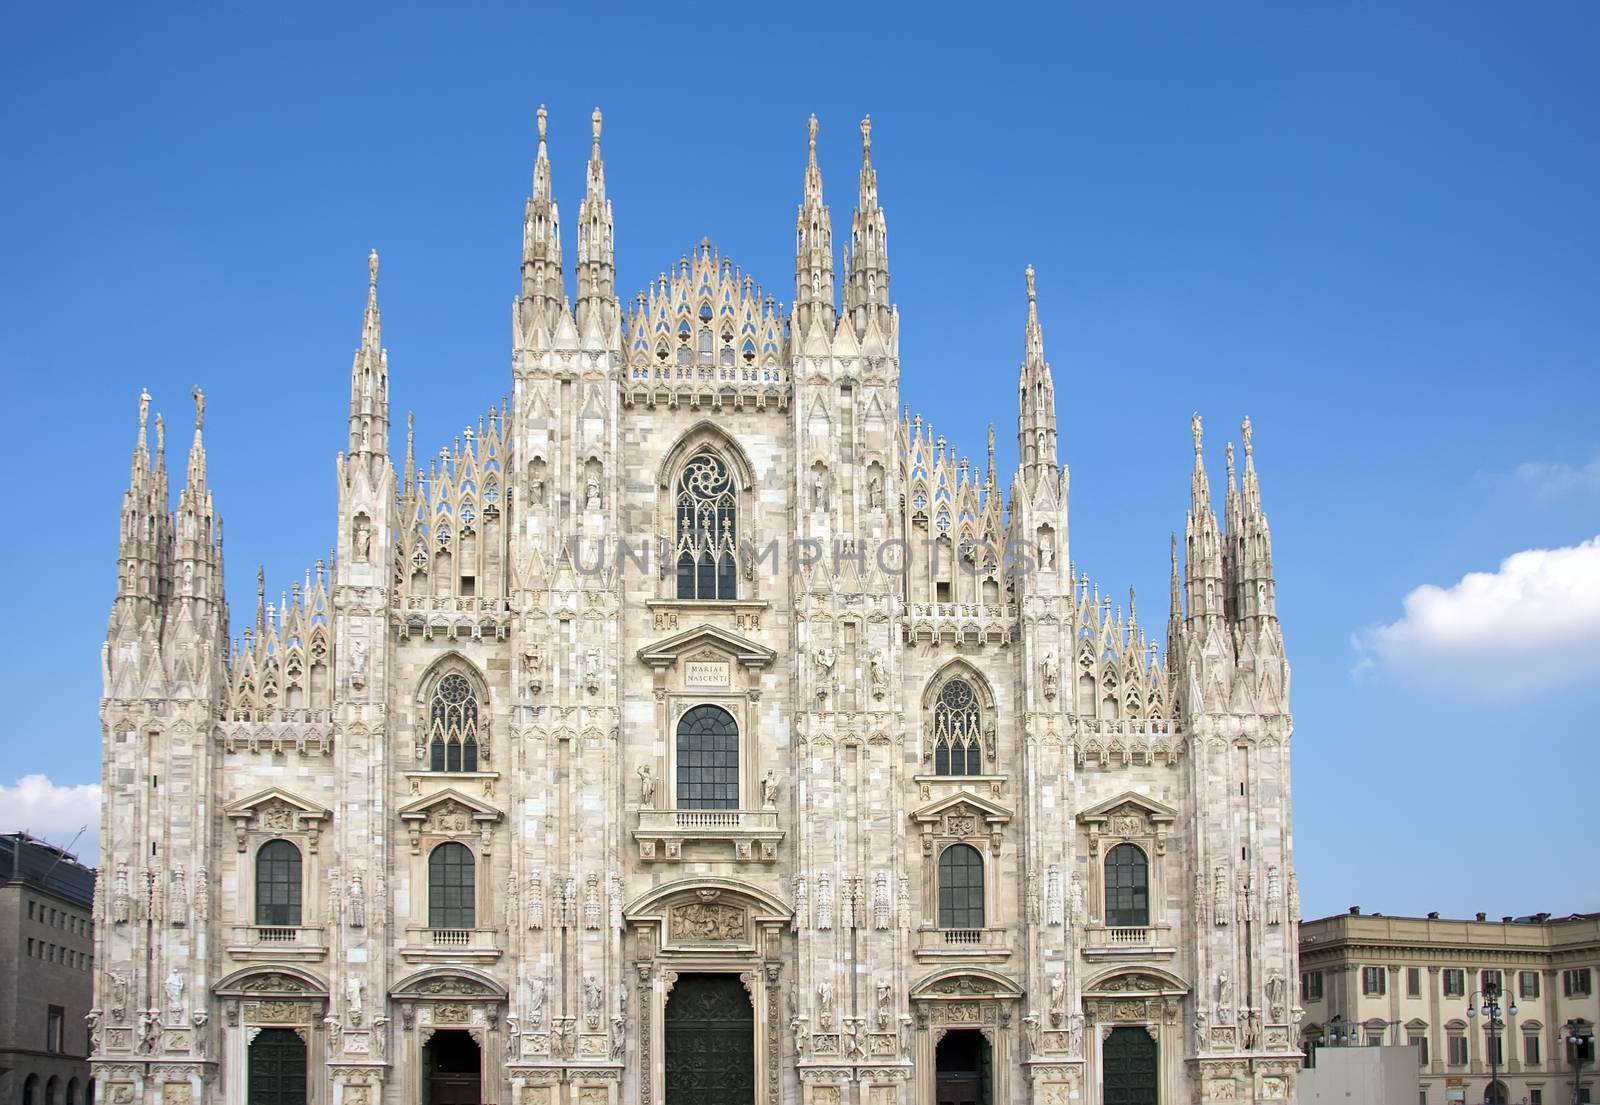 Facade of Duomo, cathedral in Milan, Italy